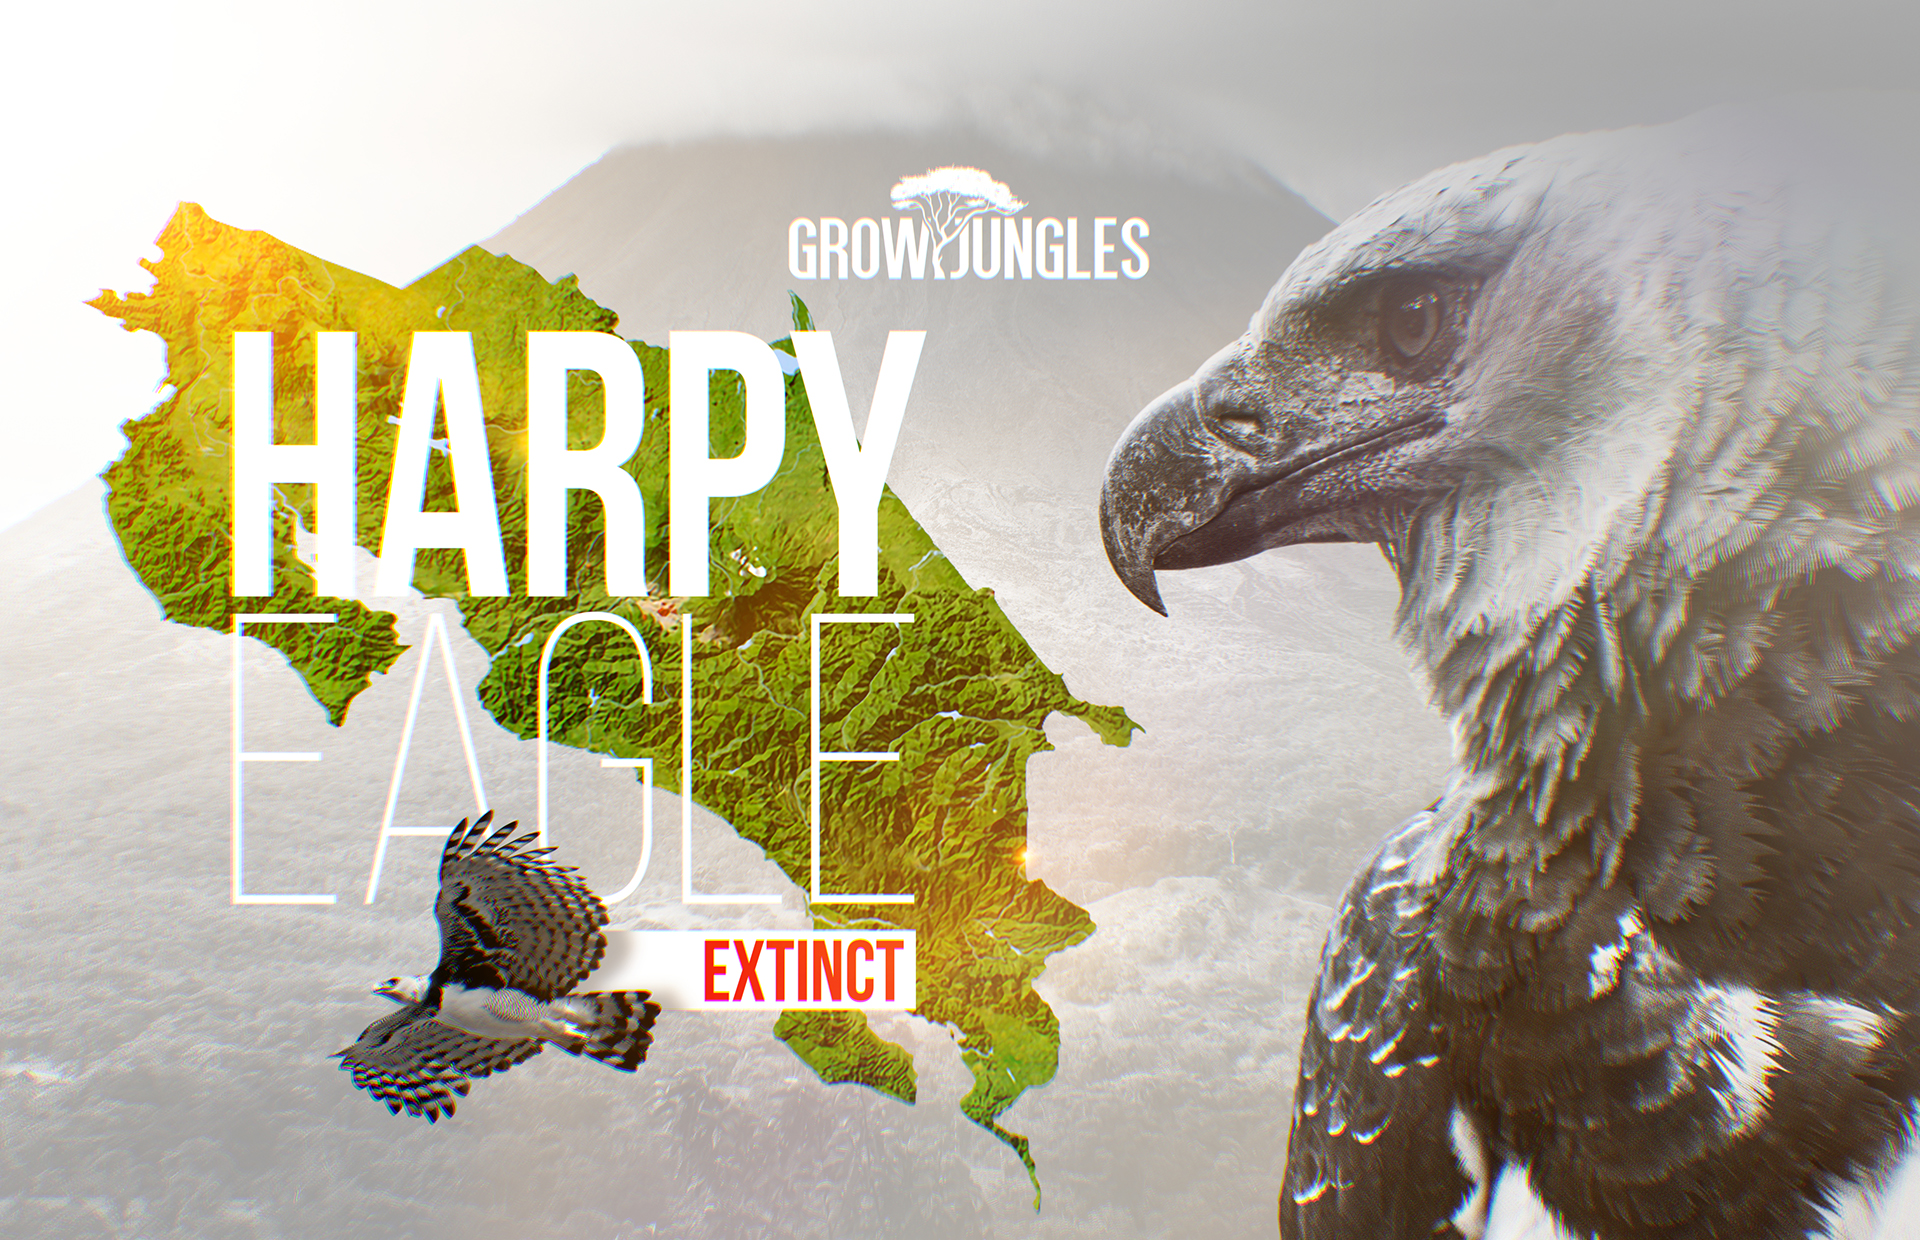 American Harpy Eagle (Birds)  Harpy eagle, Types of eagles, Pet birds